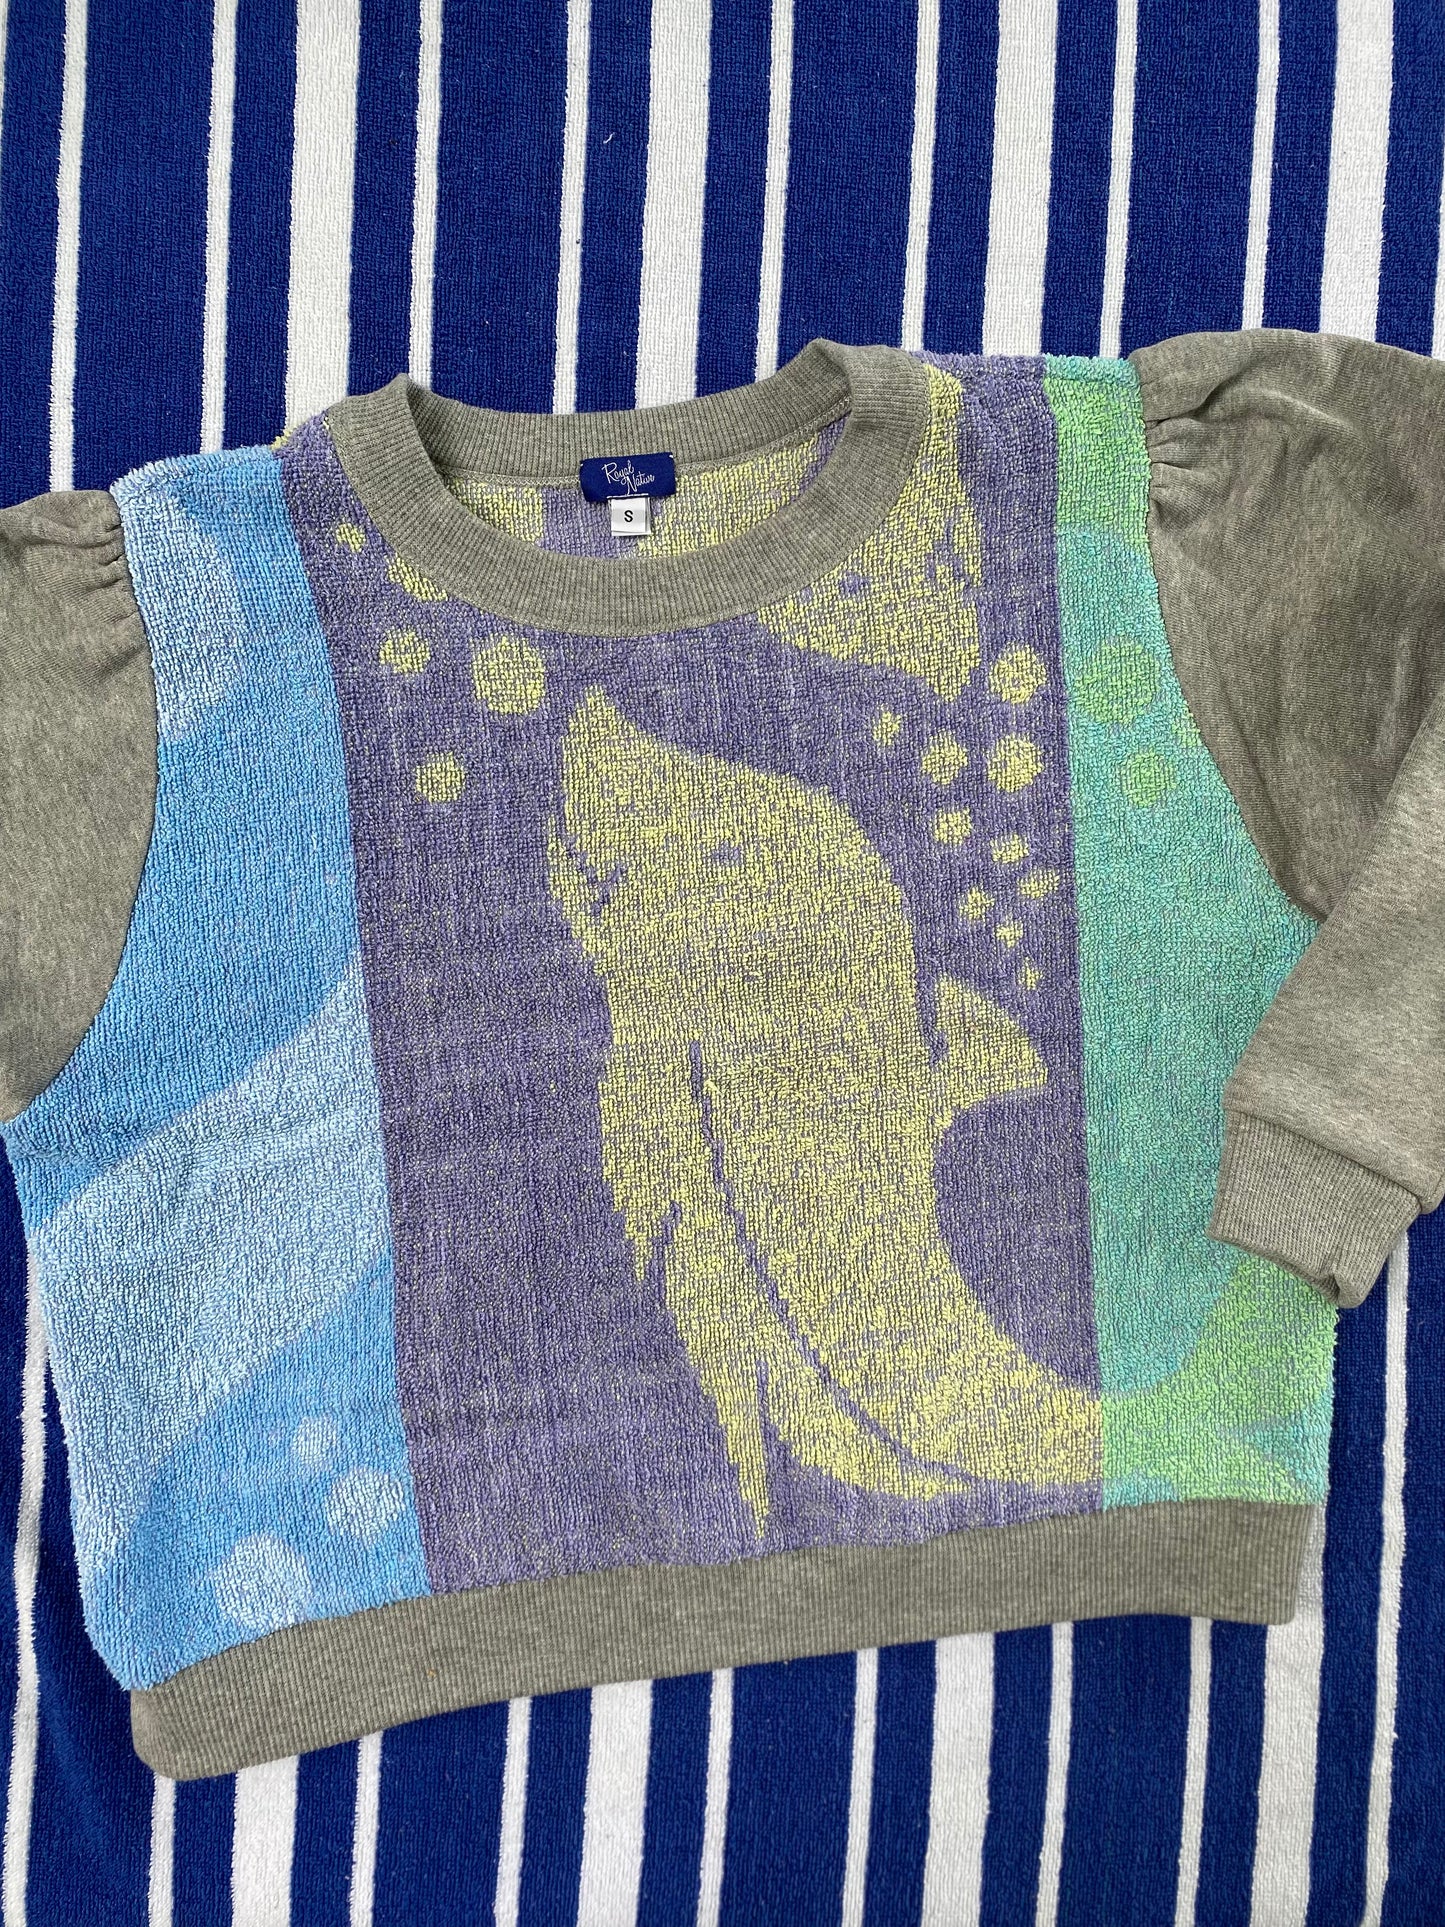 Lake sweatshirt in Dolphin Love